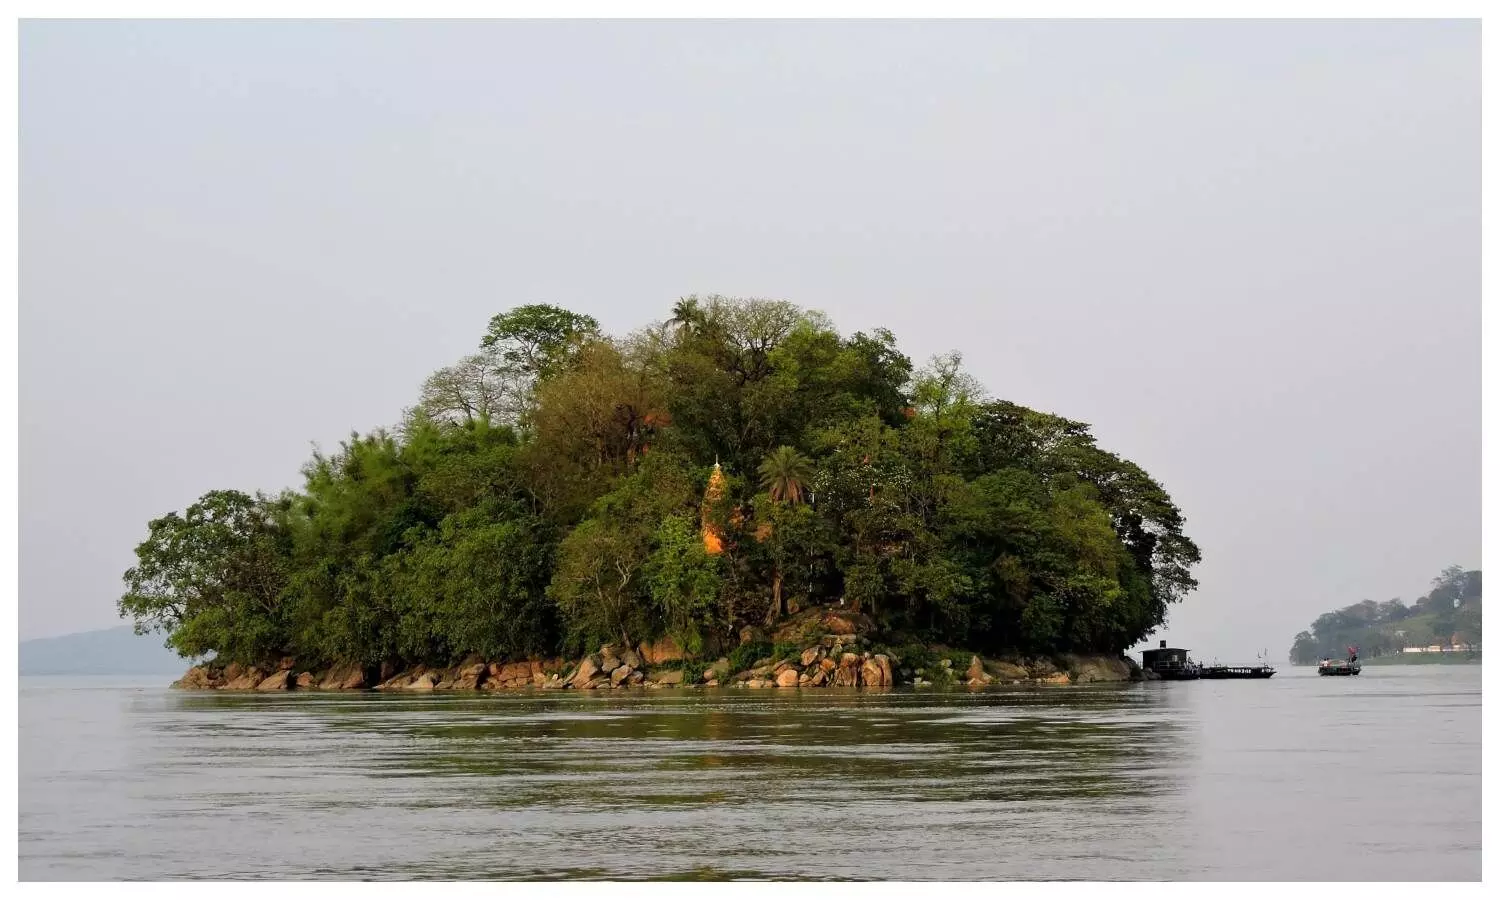 Umananda River Island in Assam